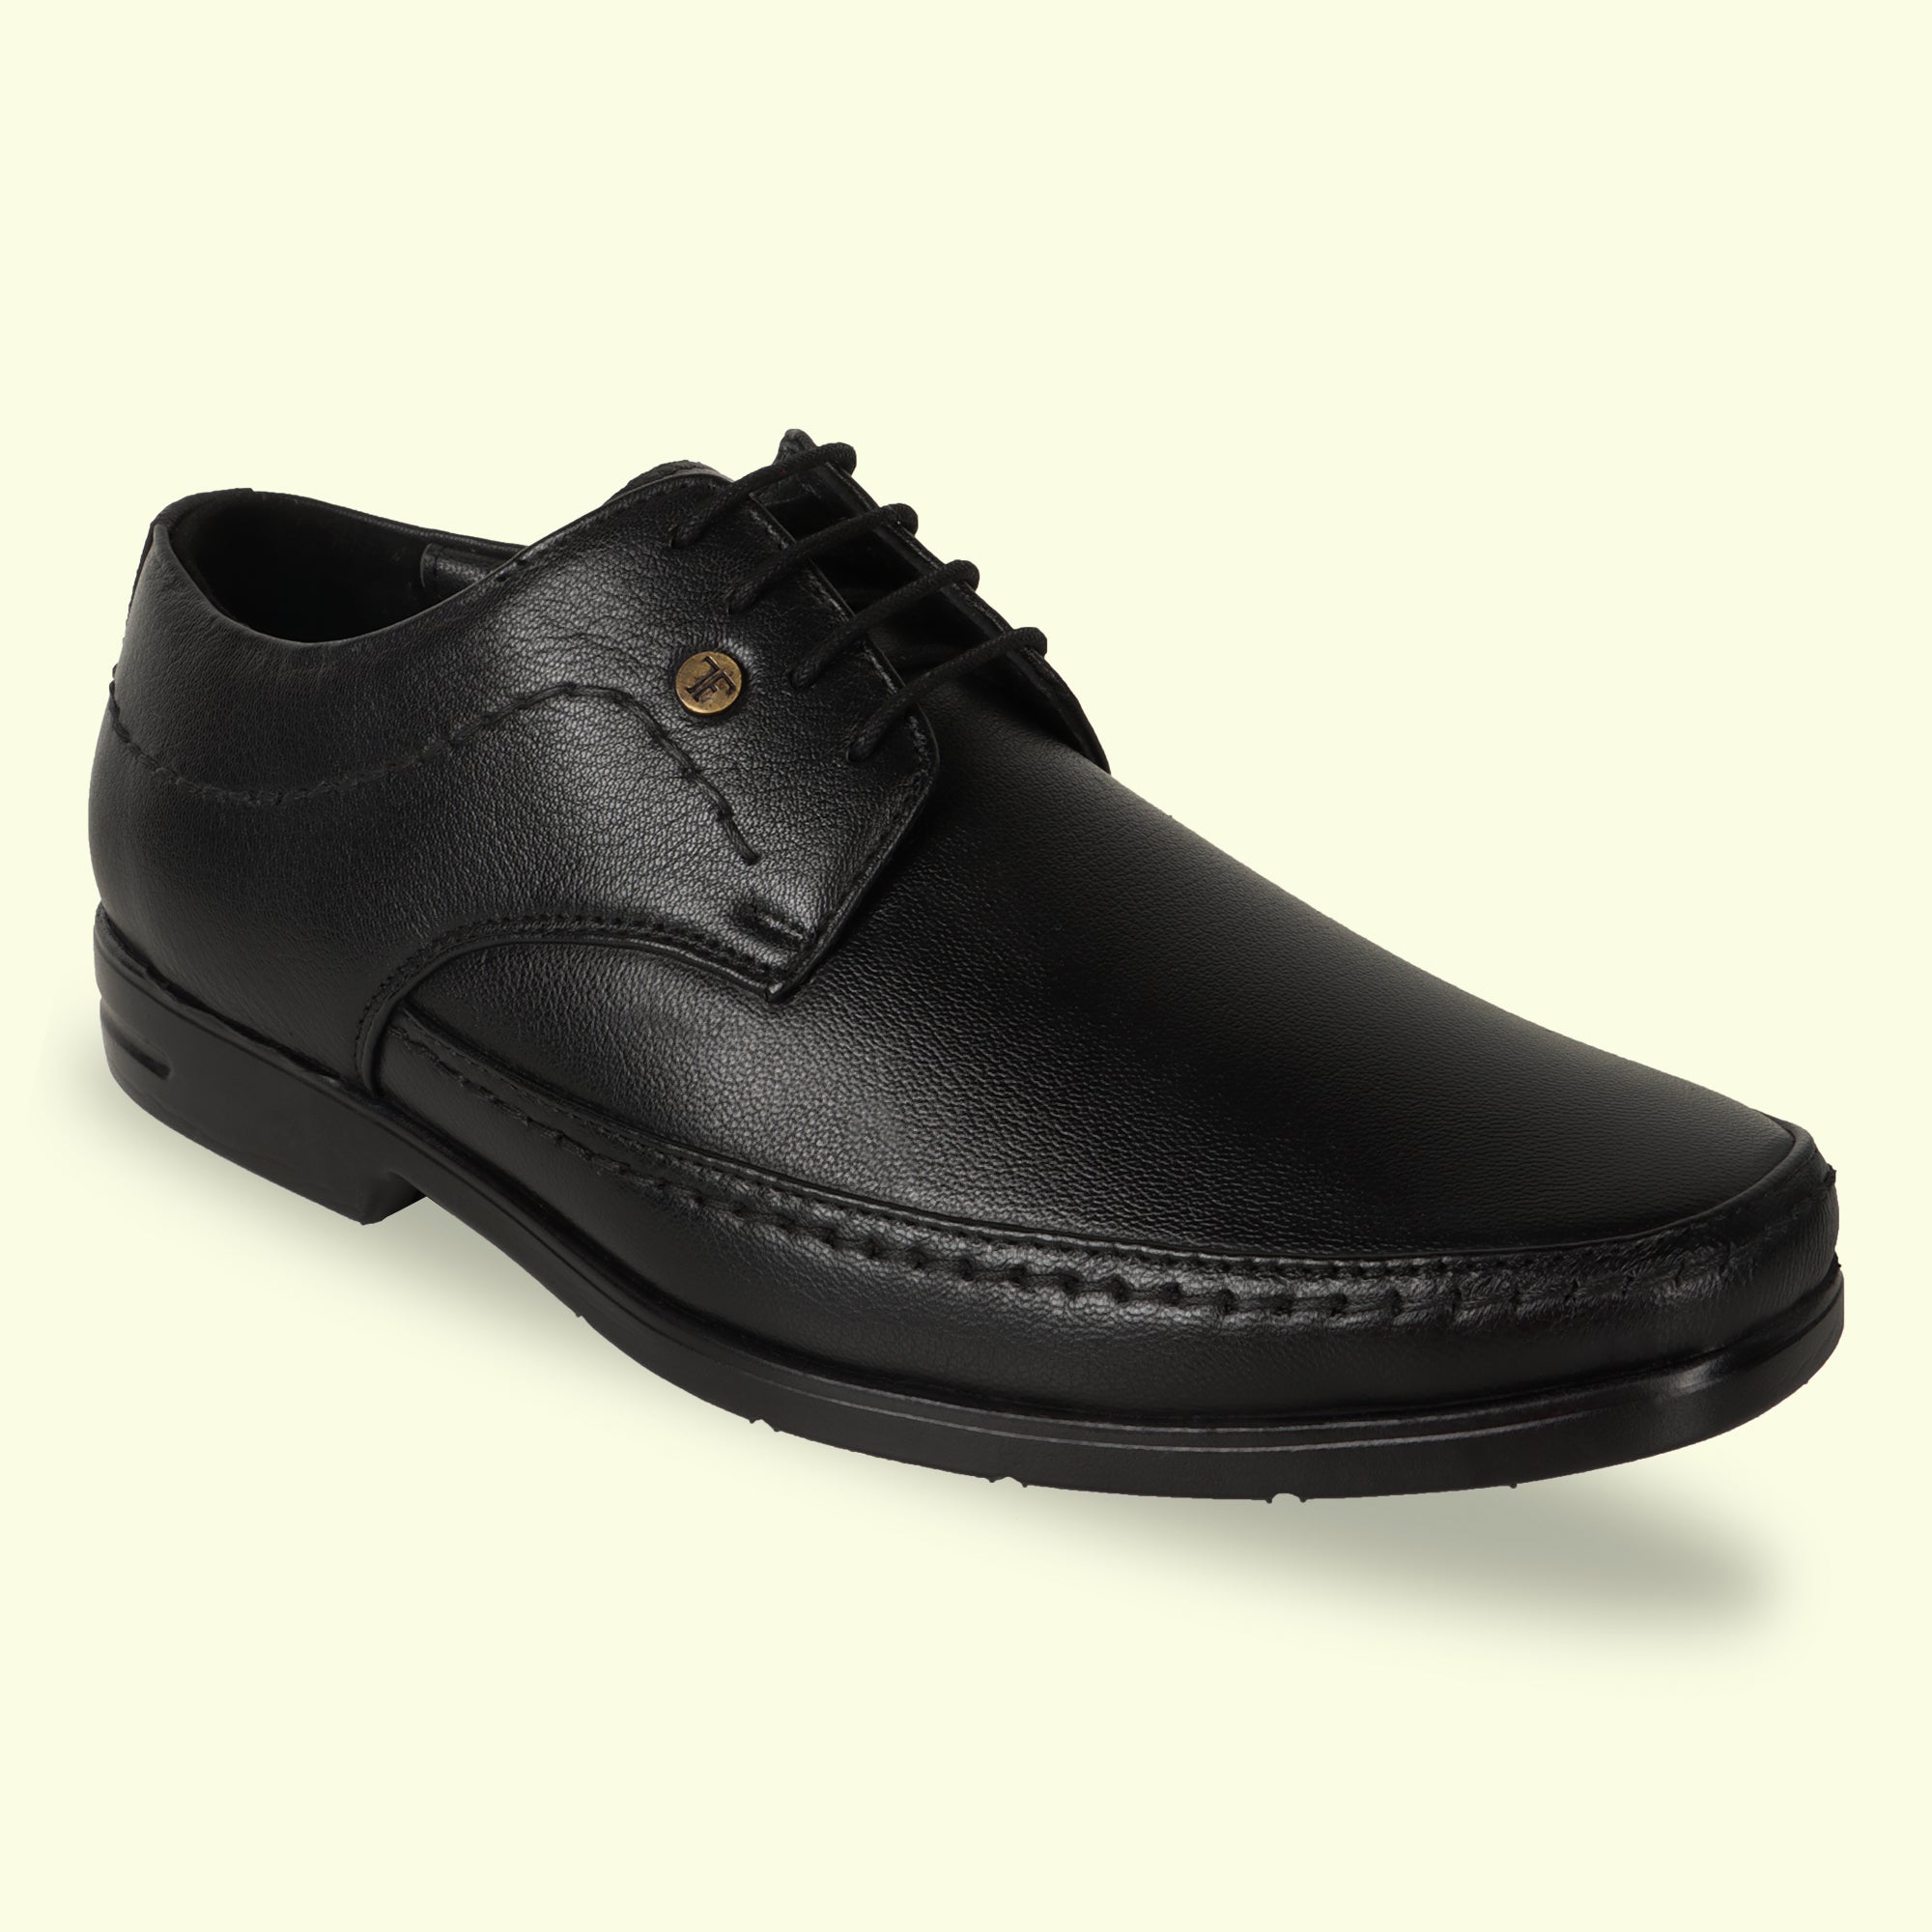 TRUDGE Black shoe For Men - 5039